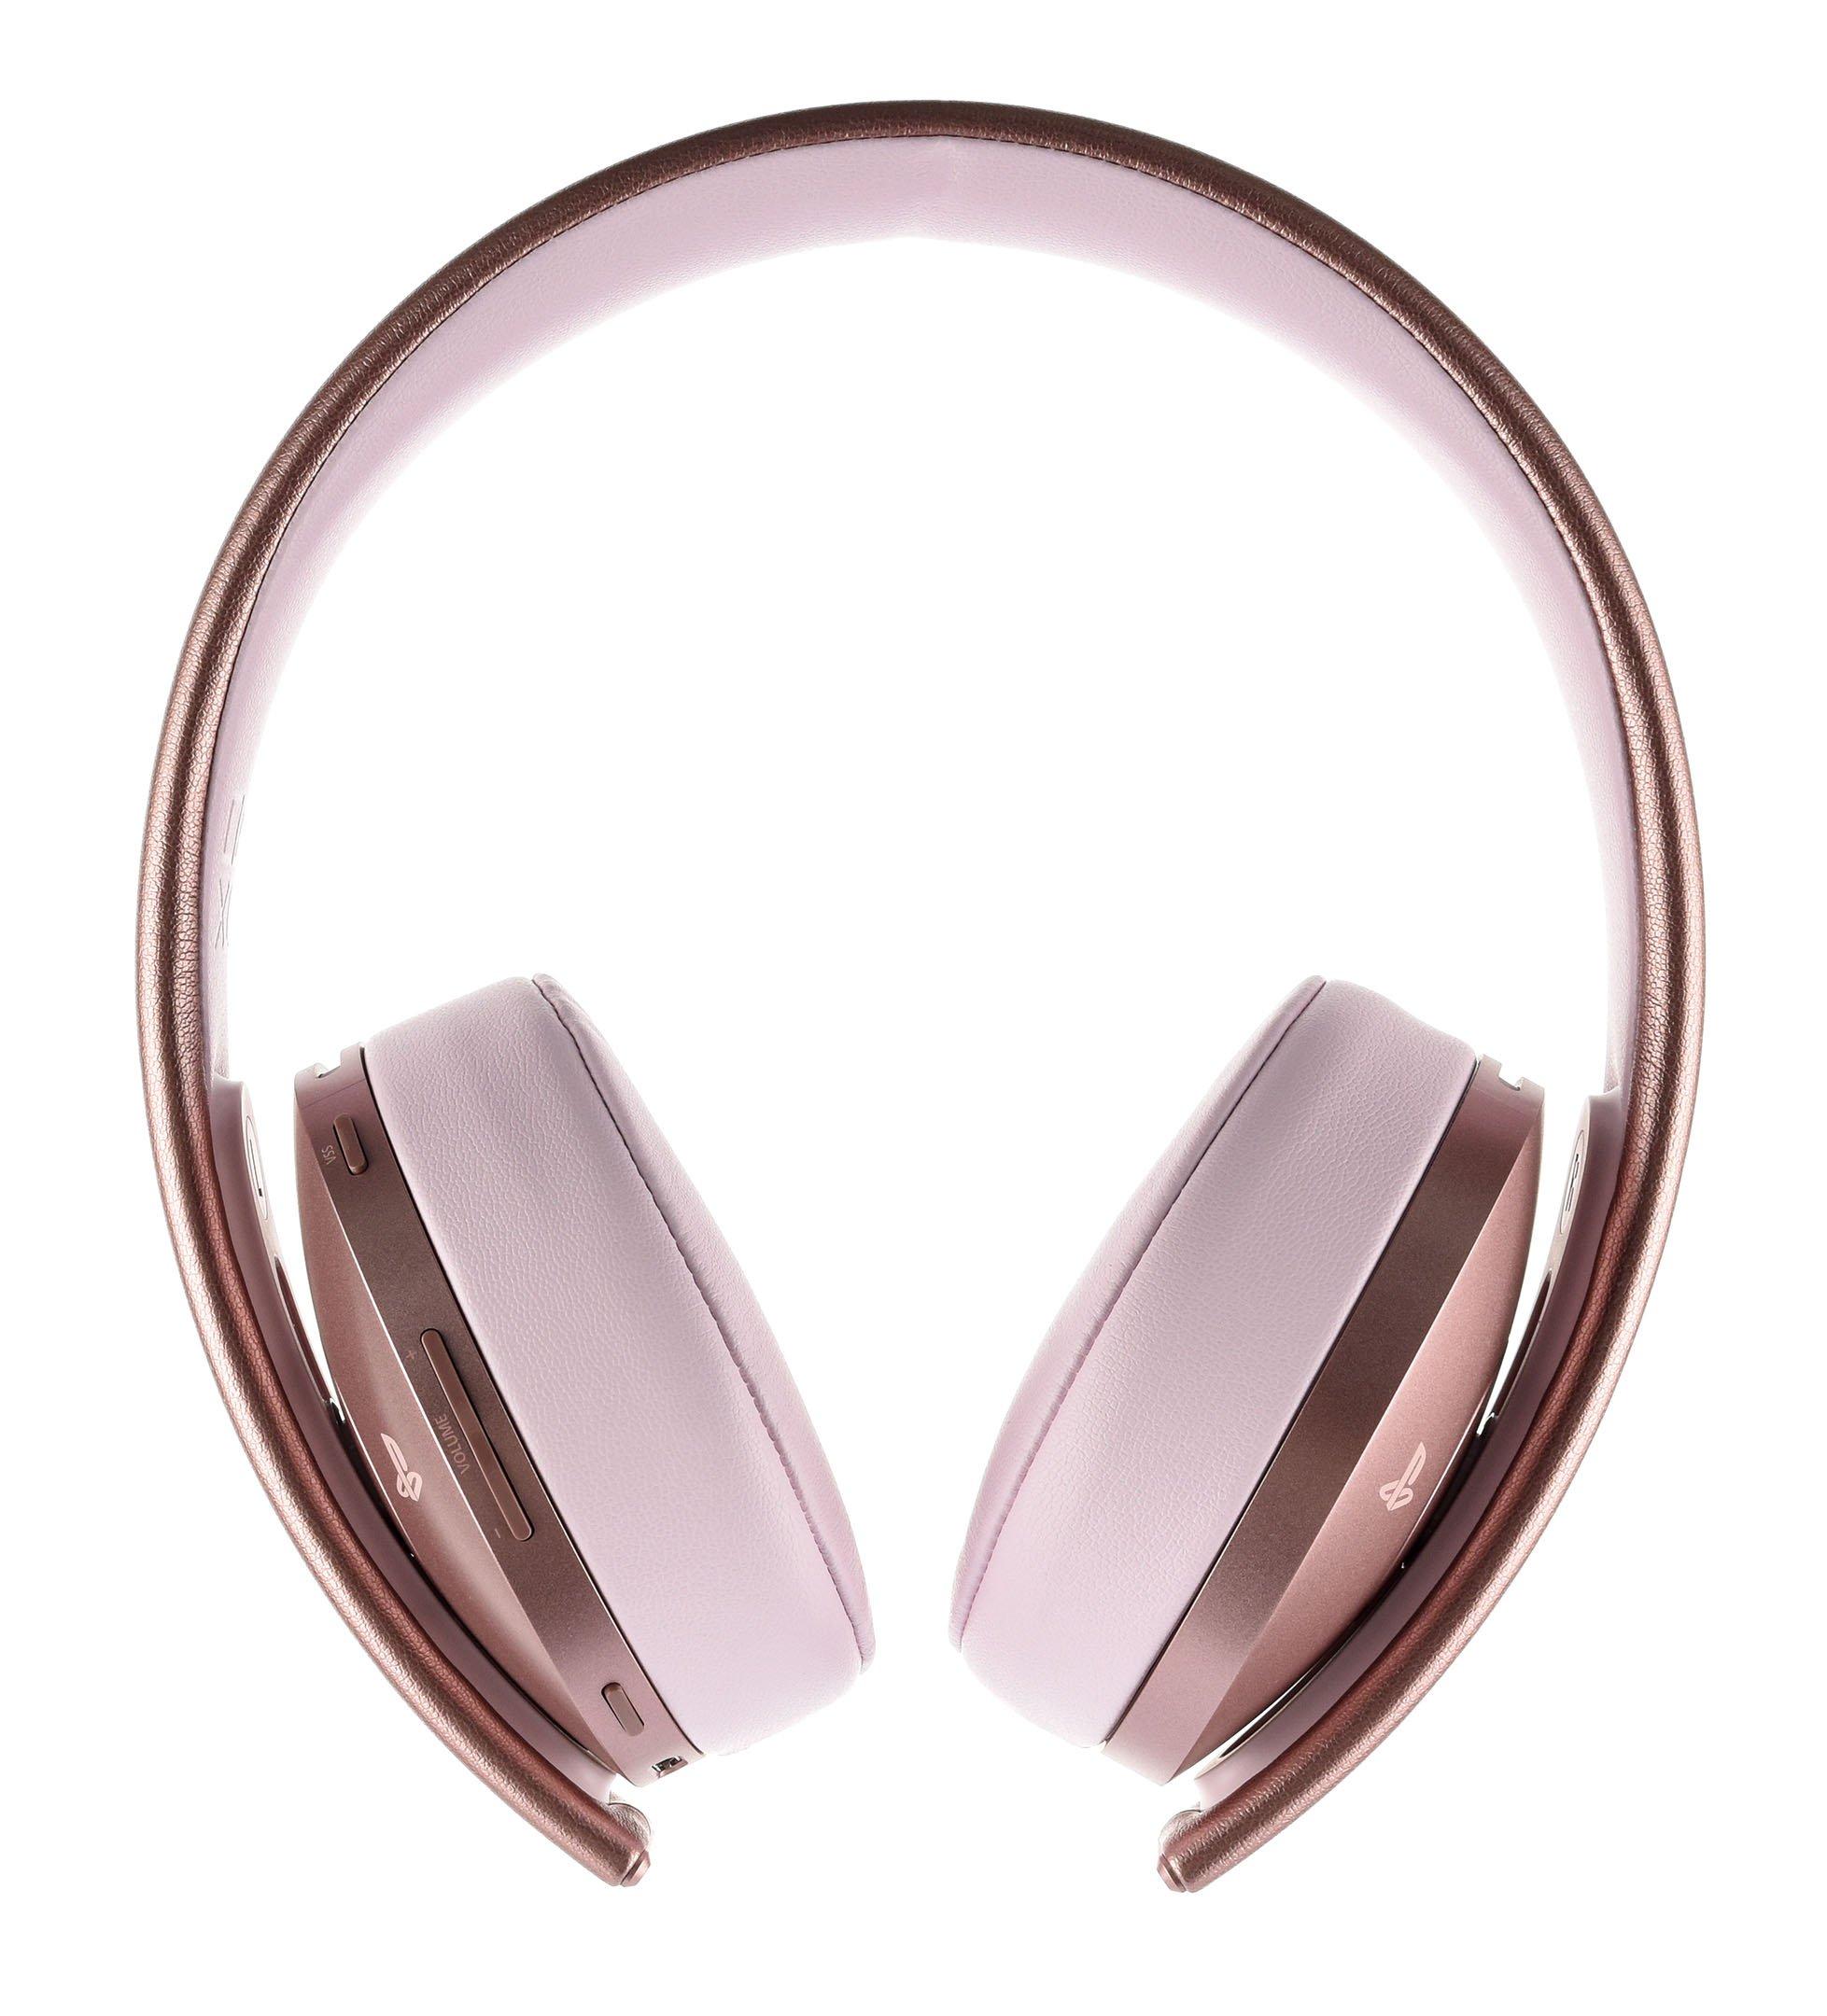 sony rose gold wireless headphones